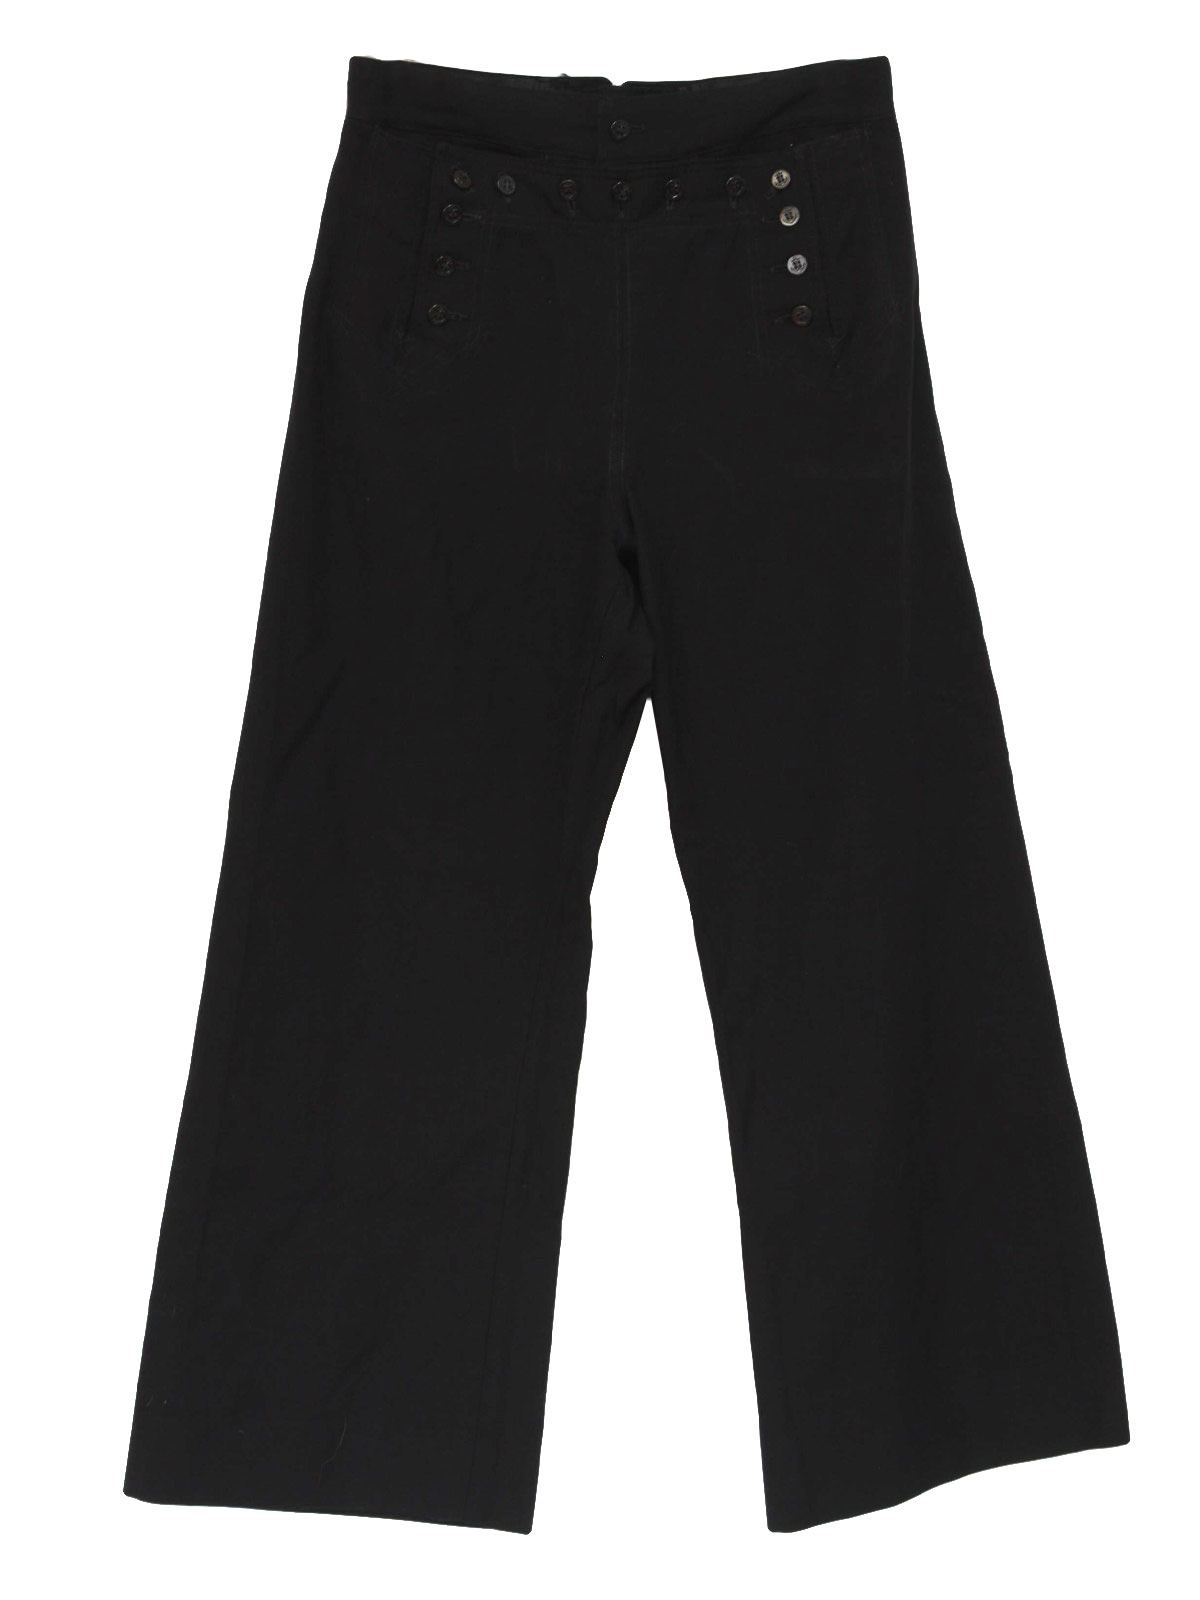 Seventies Statham Garment Corp. Bellbottom Pants: 70s -Statham Garment ...